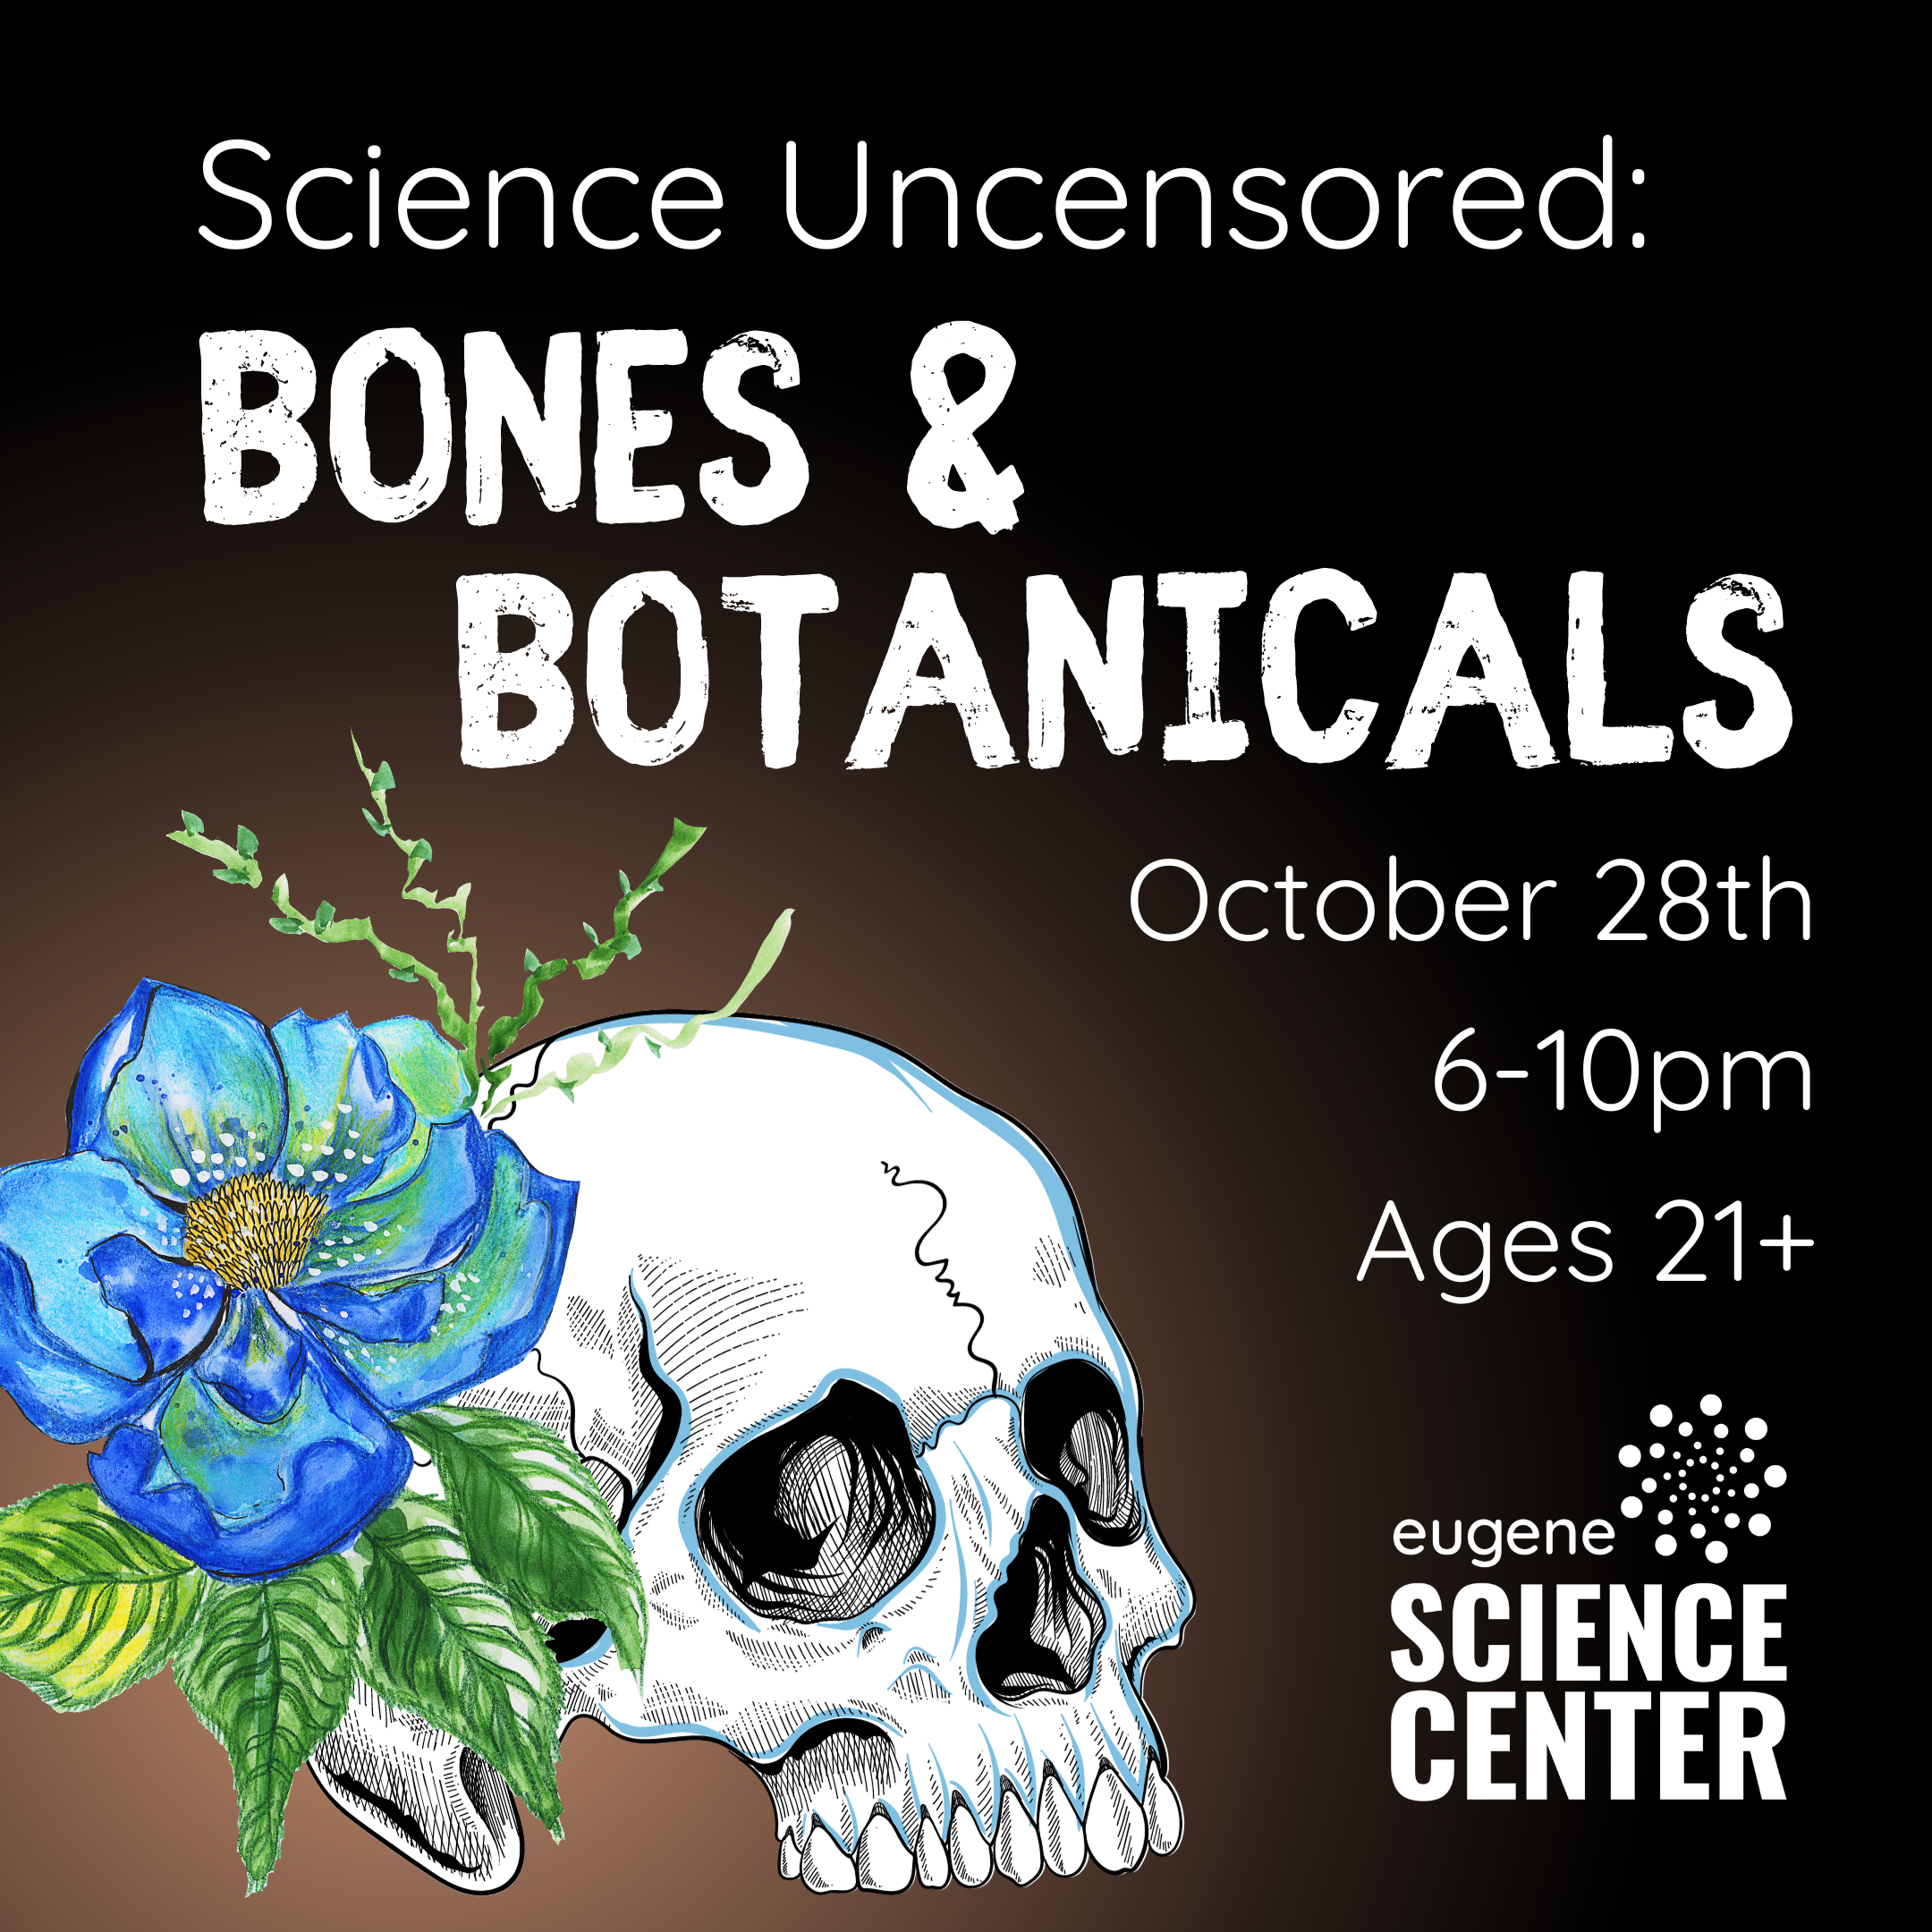 Science Uncensored: Bones & Botanicals